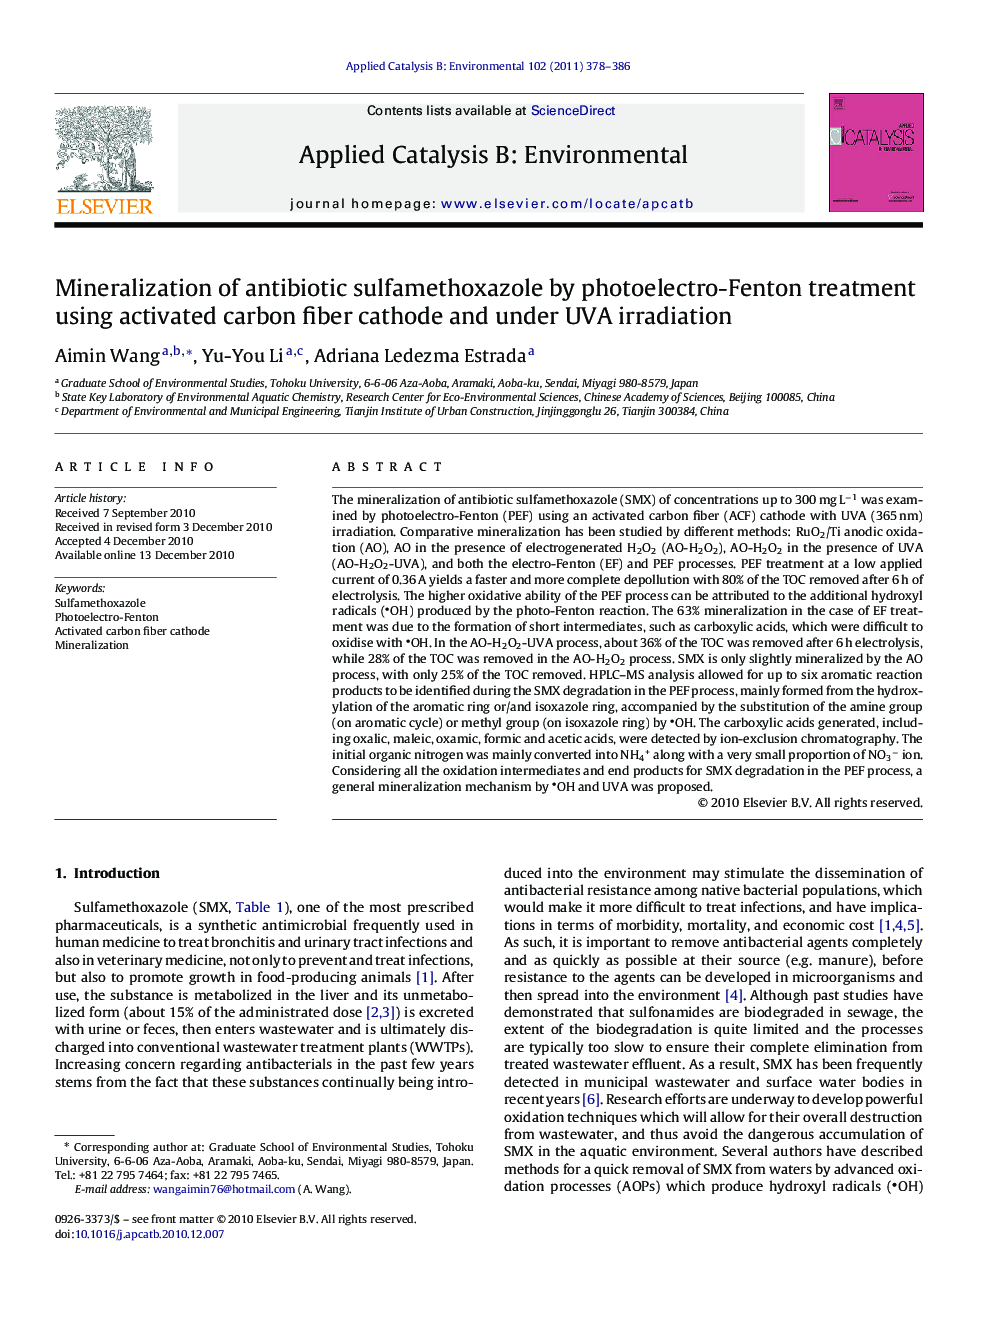 Mineralization of antibiotic sulfamethoxazole by photoelectro-Fenton treatment using activated carbon fiber cathode and under UVA irradiation